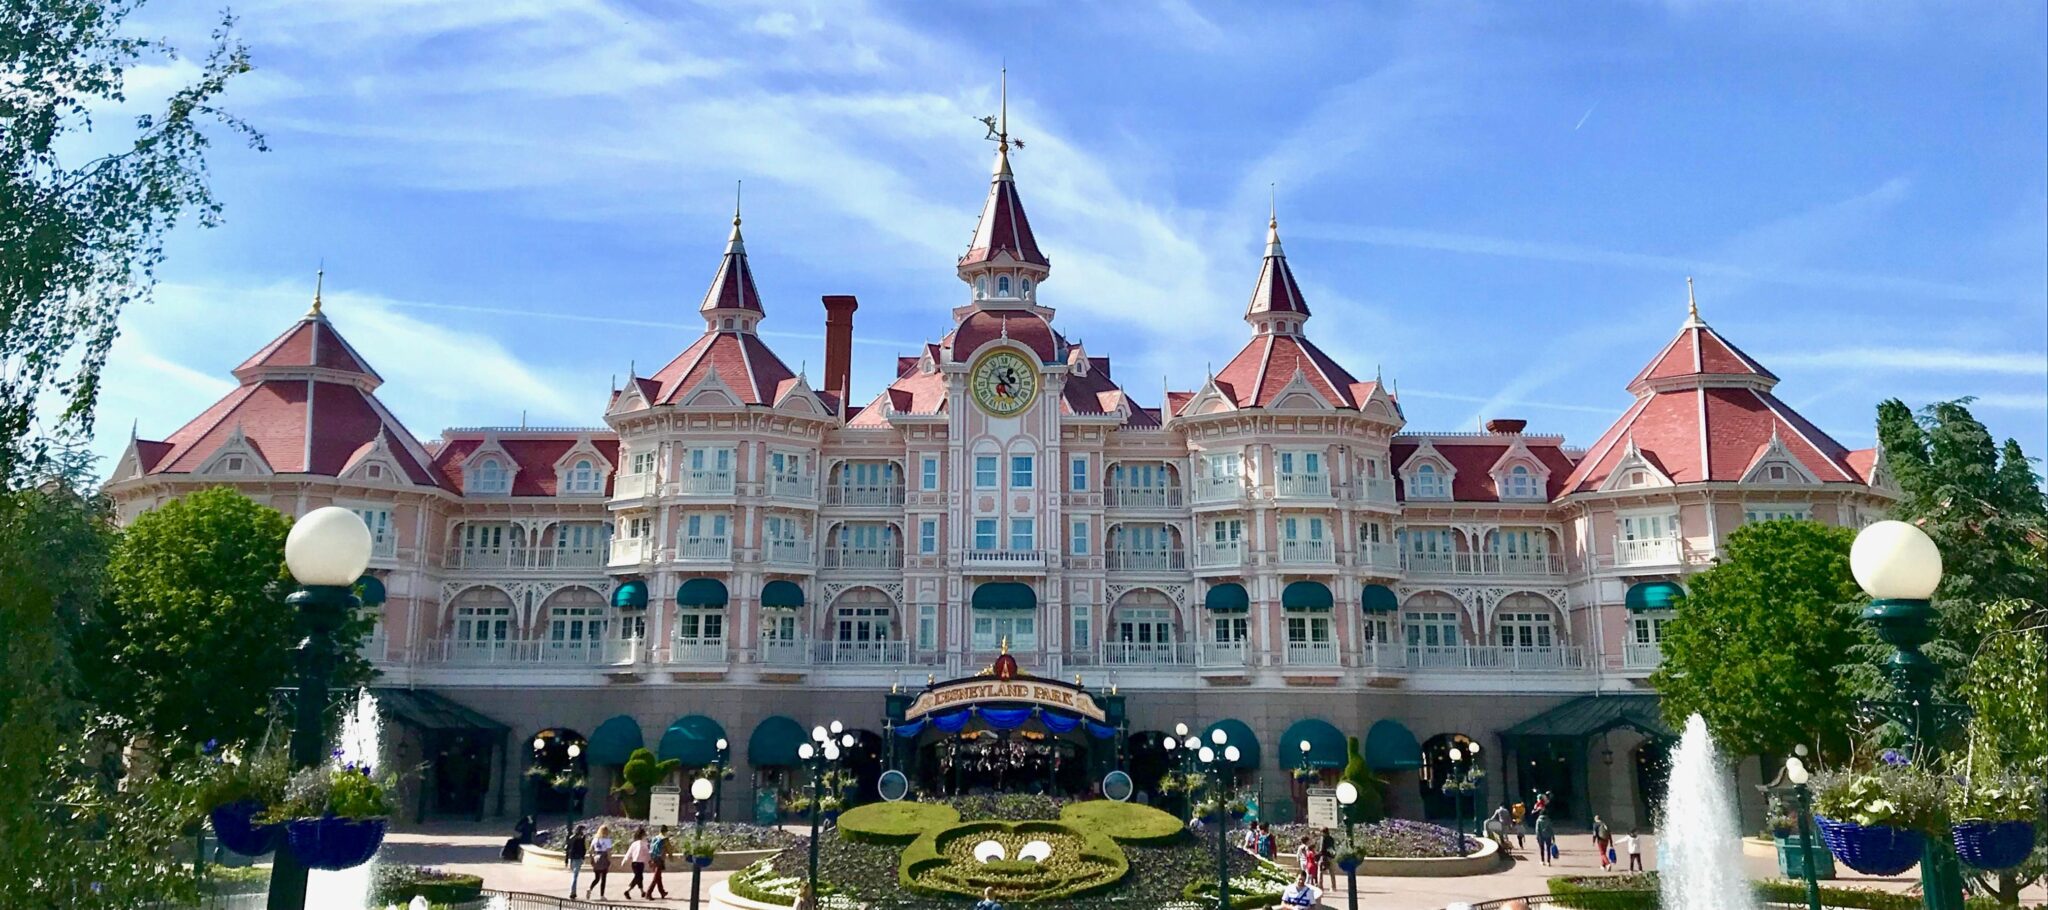 Is Disneyland Paris Right for You? - Disney Tourist Blog